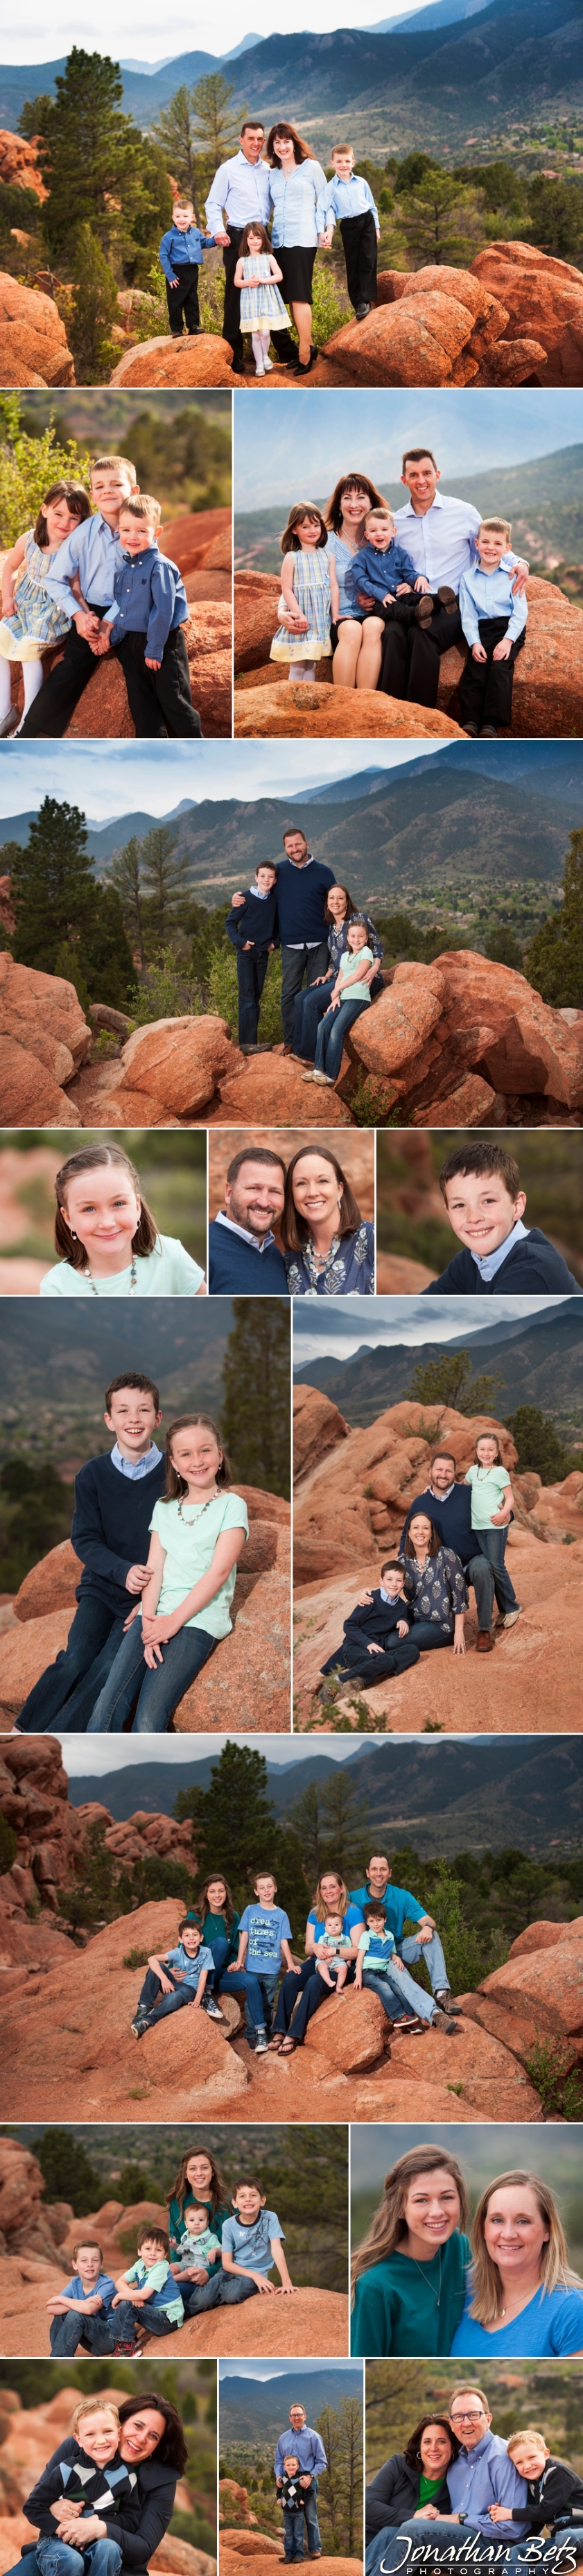 Jonathan Betz Photography Family Portrait mini sessions Colorado Springs Garden of the Gods